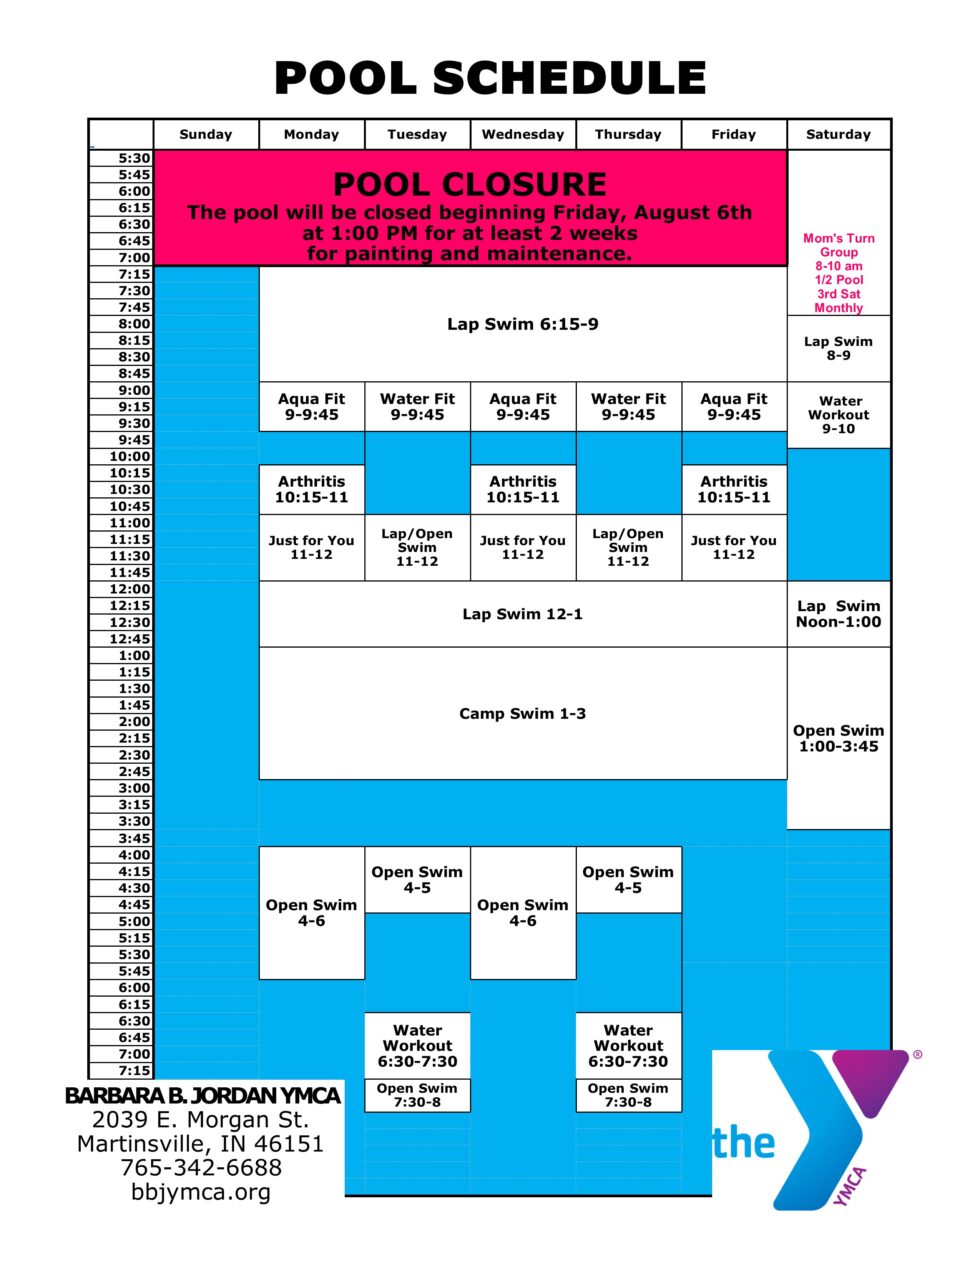 Pool Schedule Barbara B. Jordan YMCA